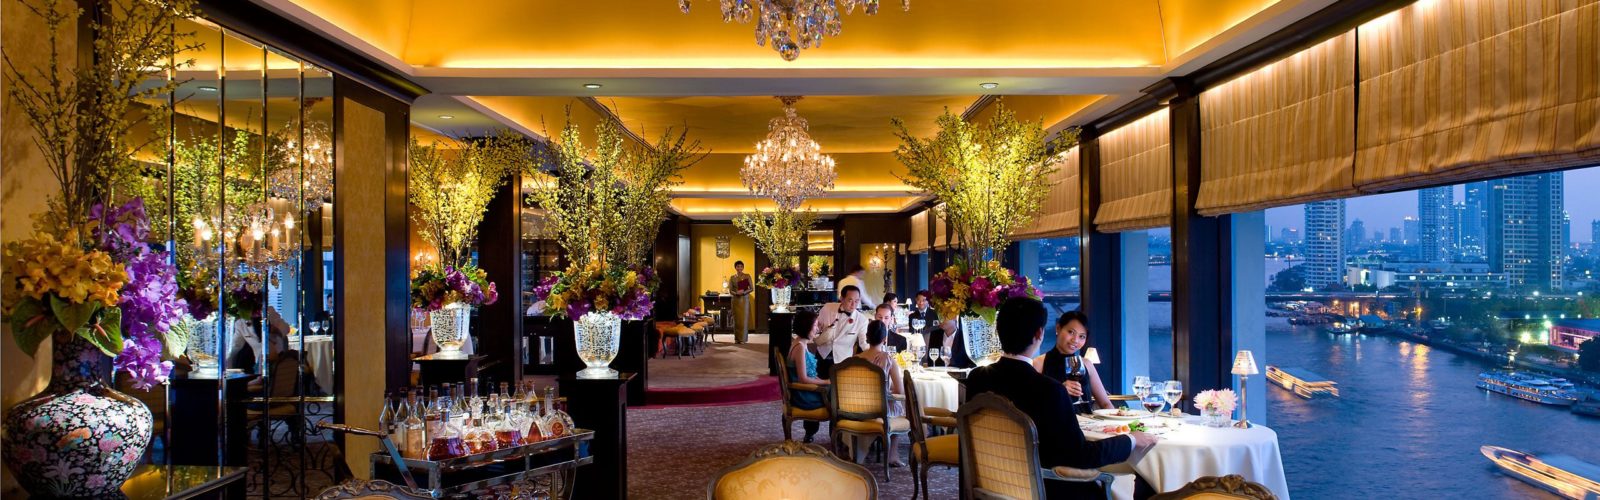 Le Norma Restaurant, Mandarin Oriental, Bangkok, Thailand